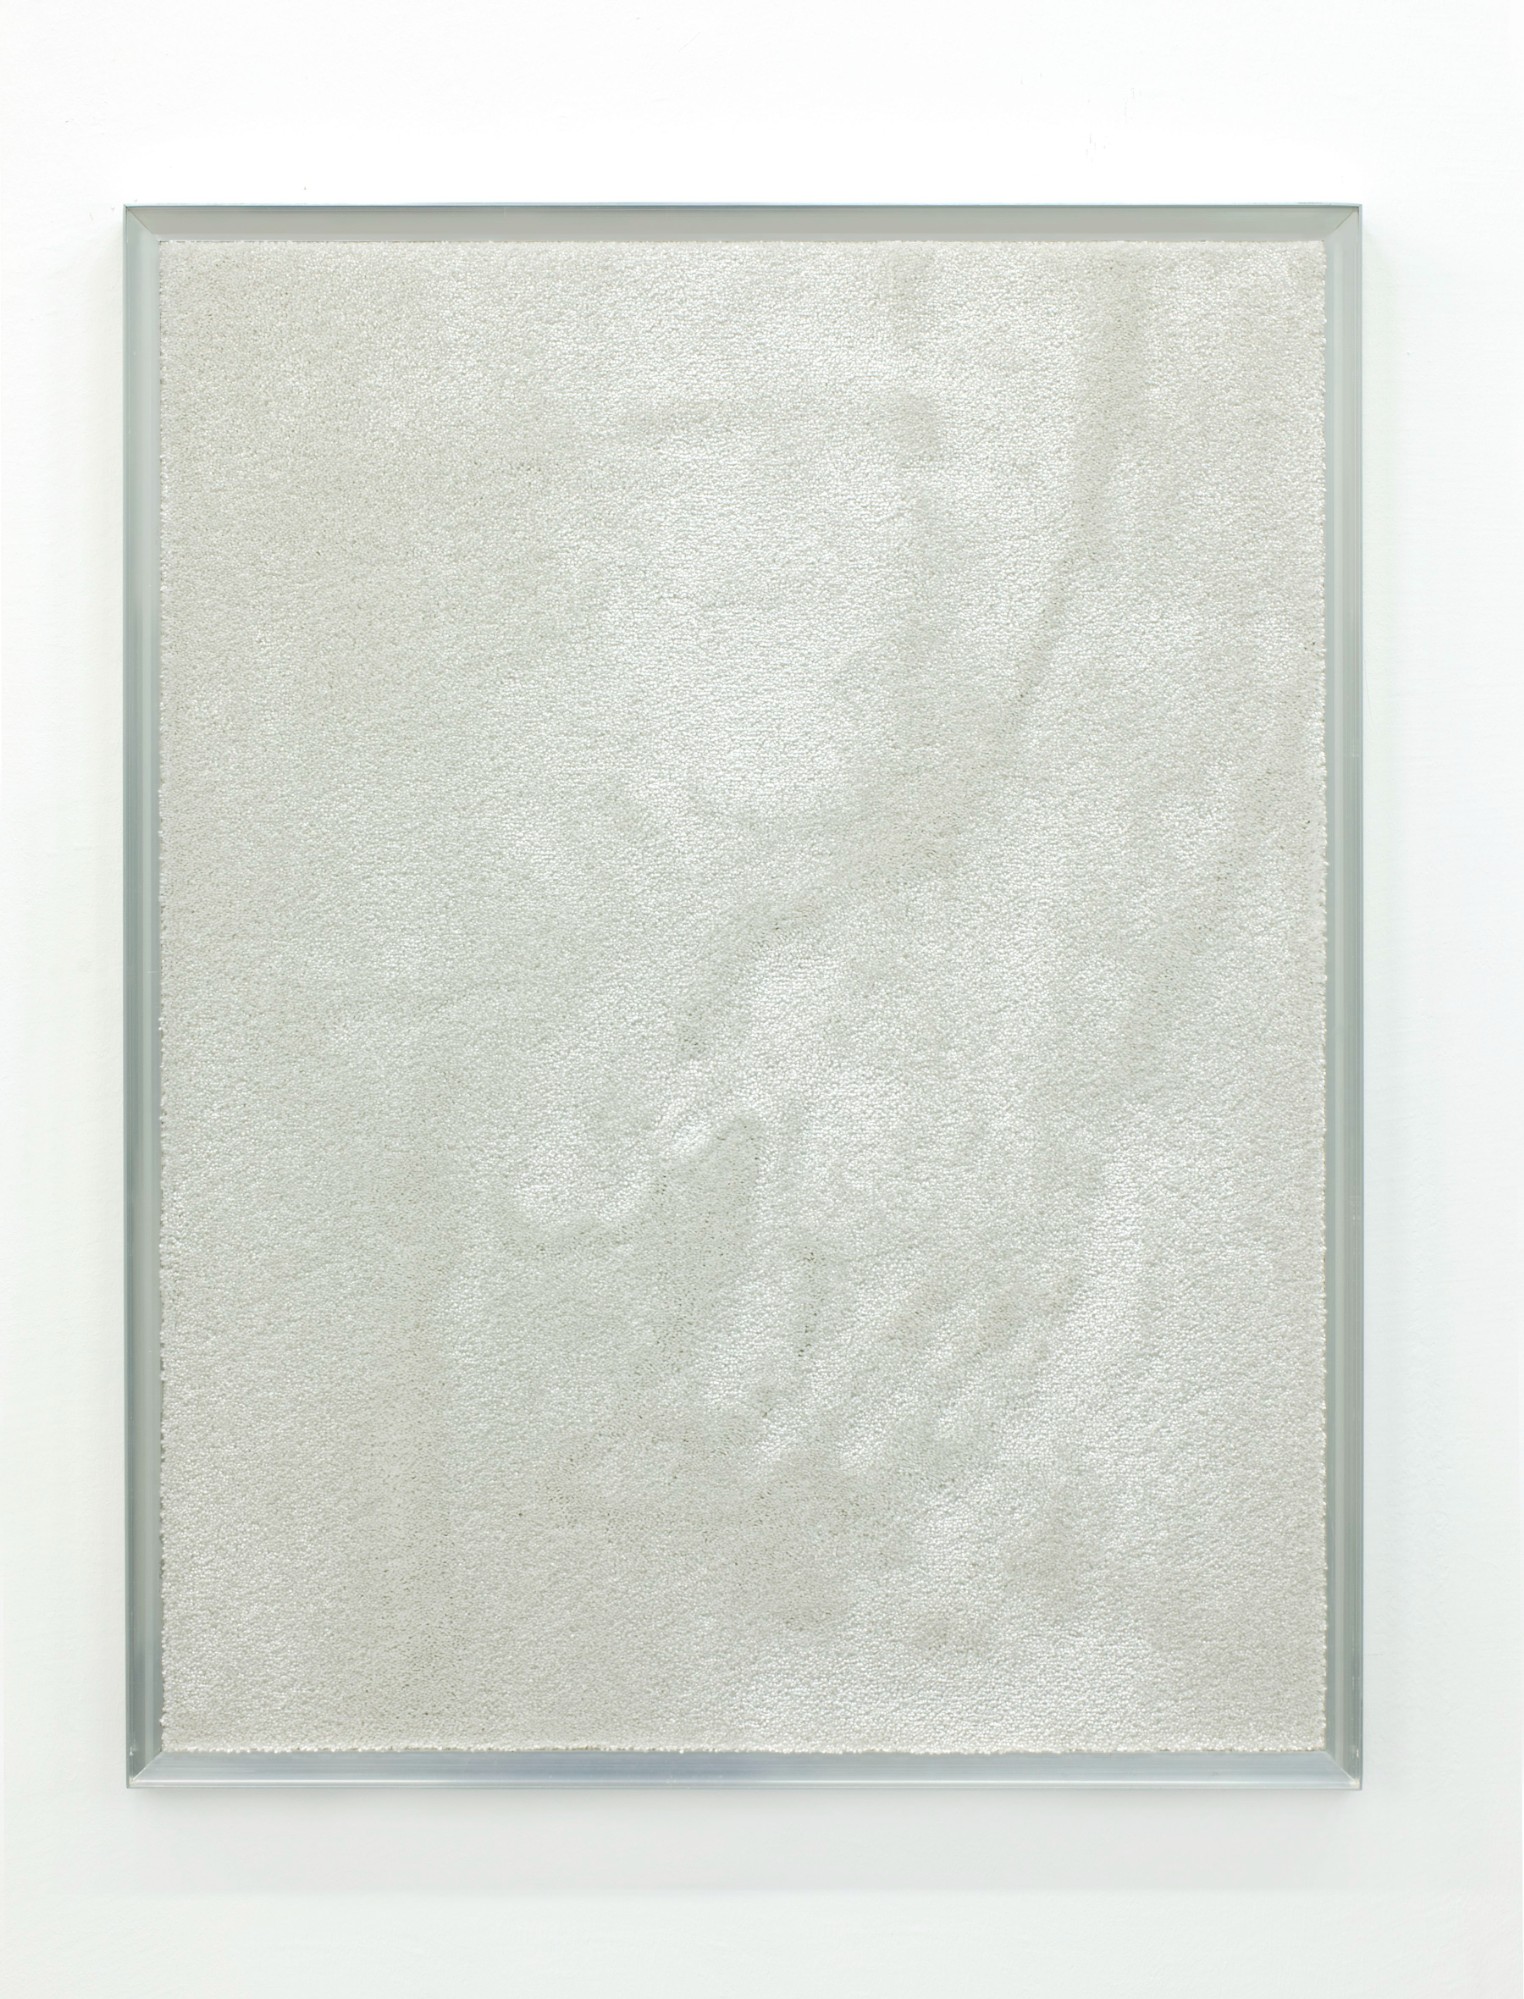 Tobias Hantmann, untitled, 2014, velour carpet, aluminium frame, acrylic glass, 90 x 70 cm